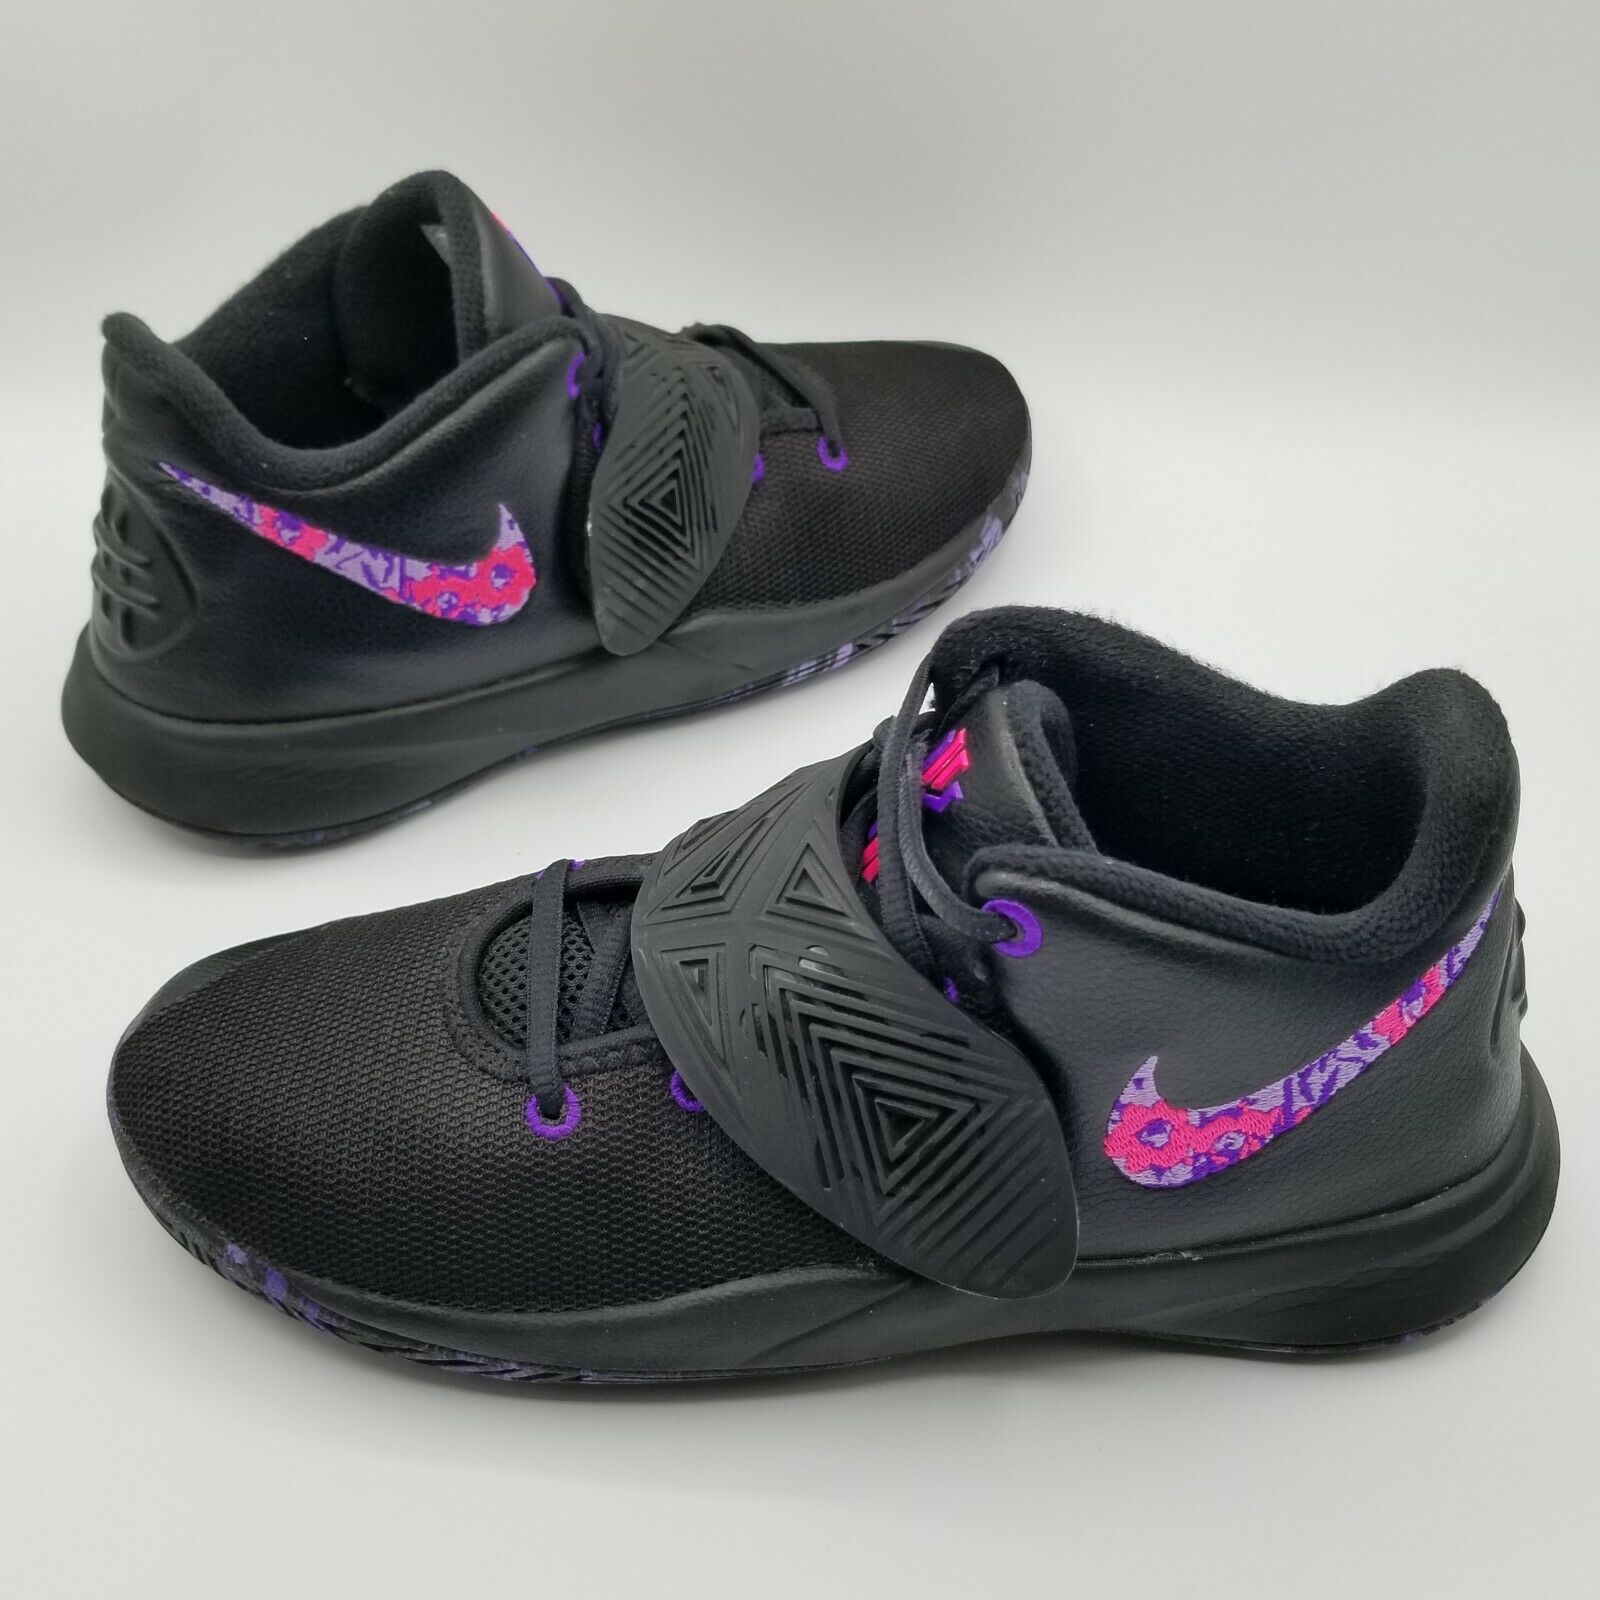 Nike Boys Kyrie Flytrap III Black Basketball Shoes Lace Up Sz 5.5Y Women's 7